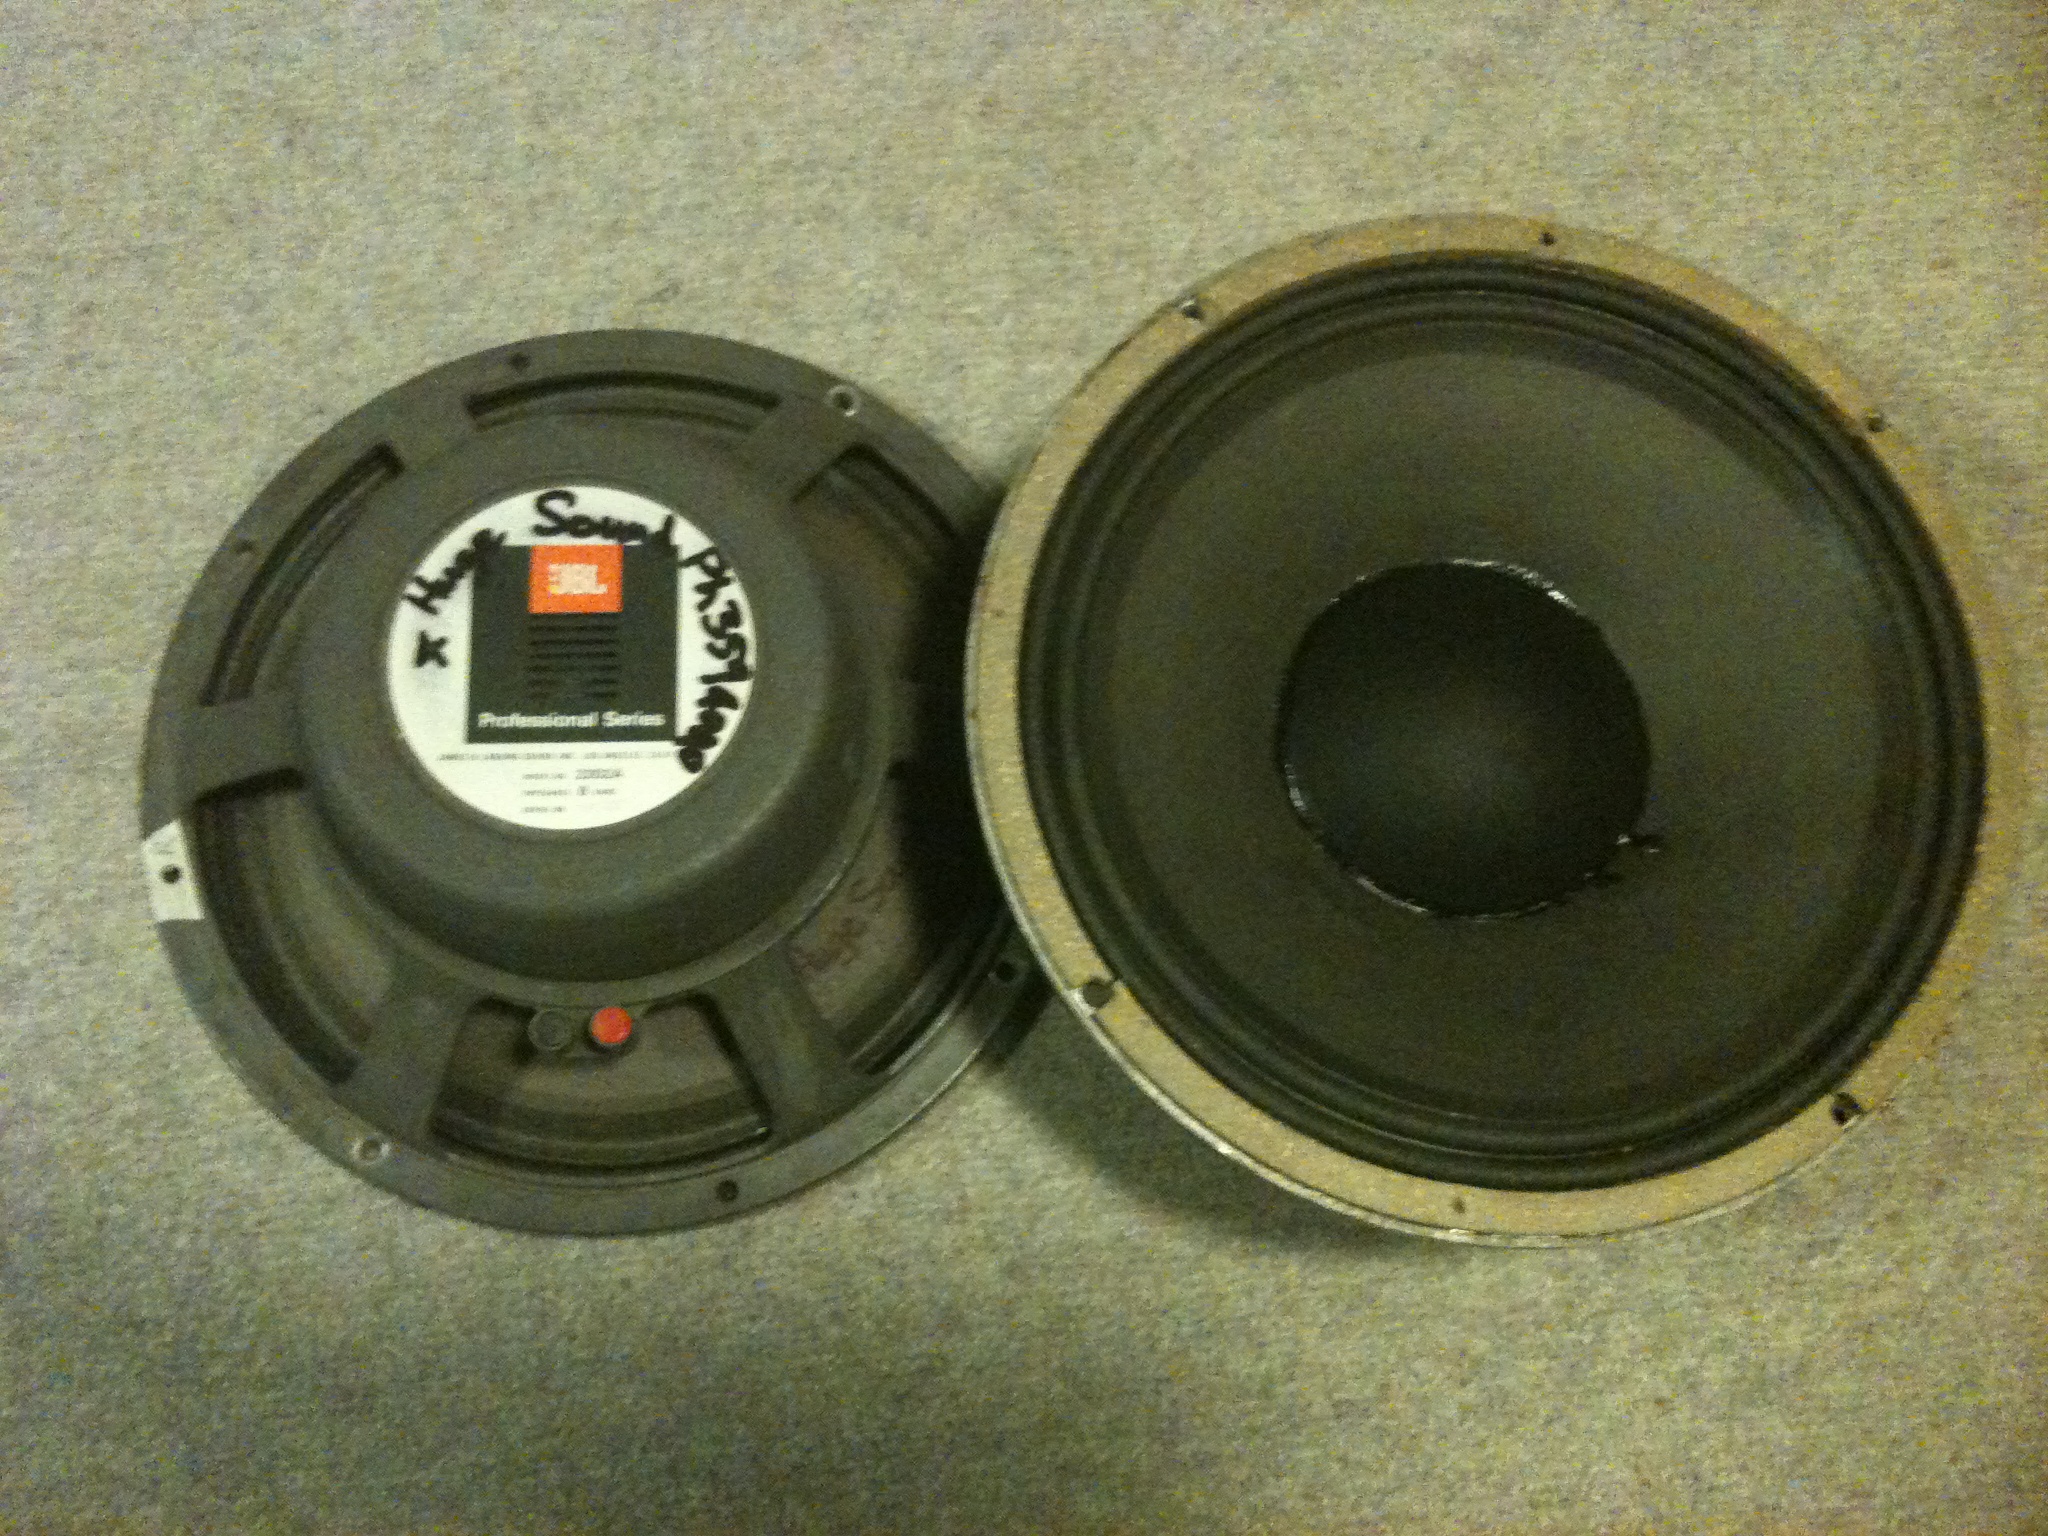 JBL K120 speakers